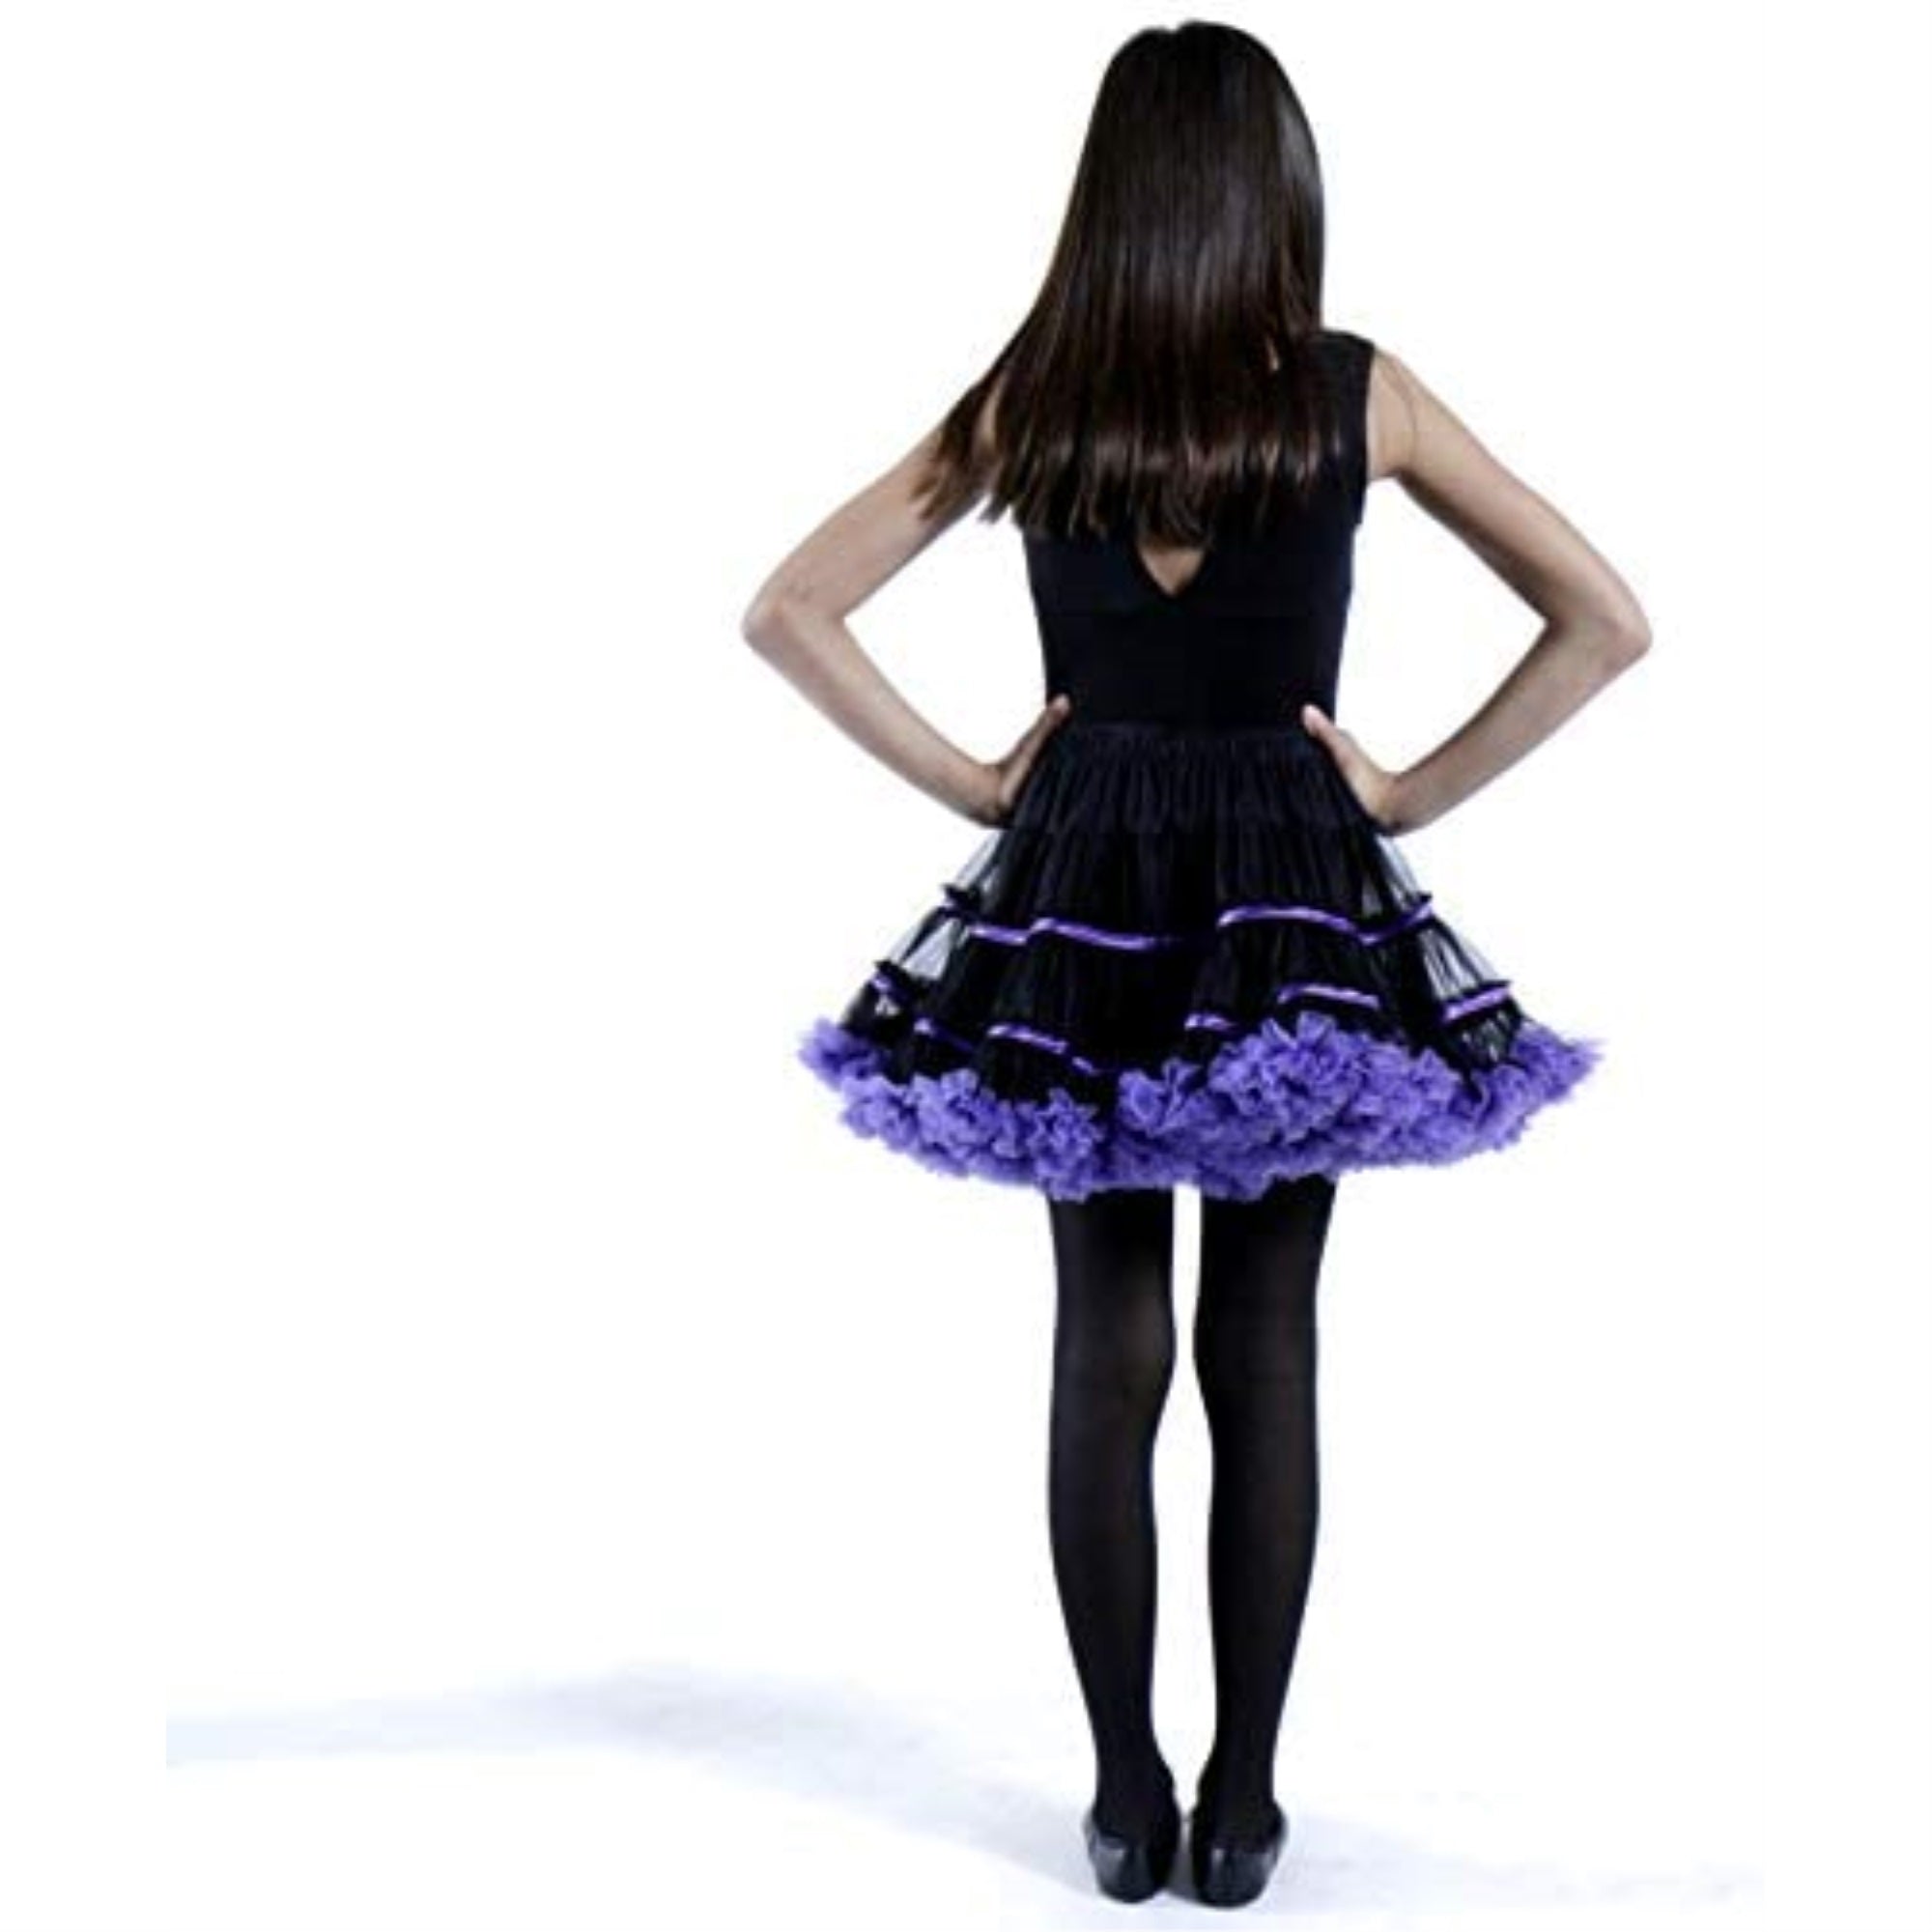 Tutus Adult Tulle Costume Petticoat - Black/Purple malcomodes-biz.myshopify.com